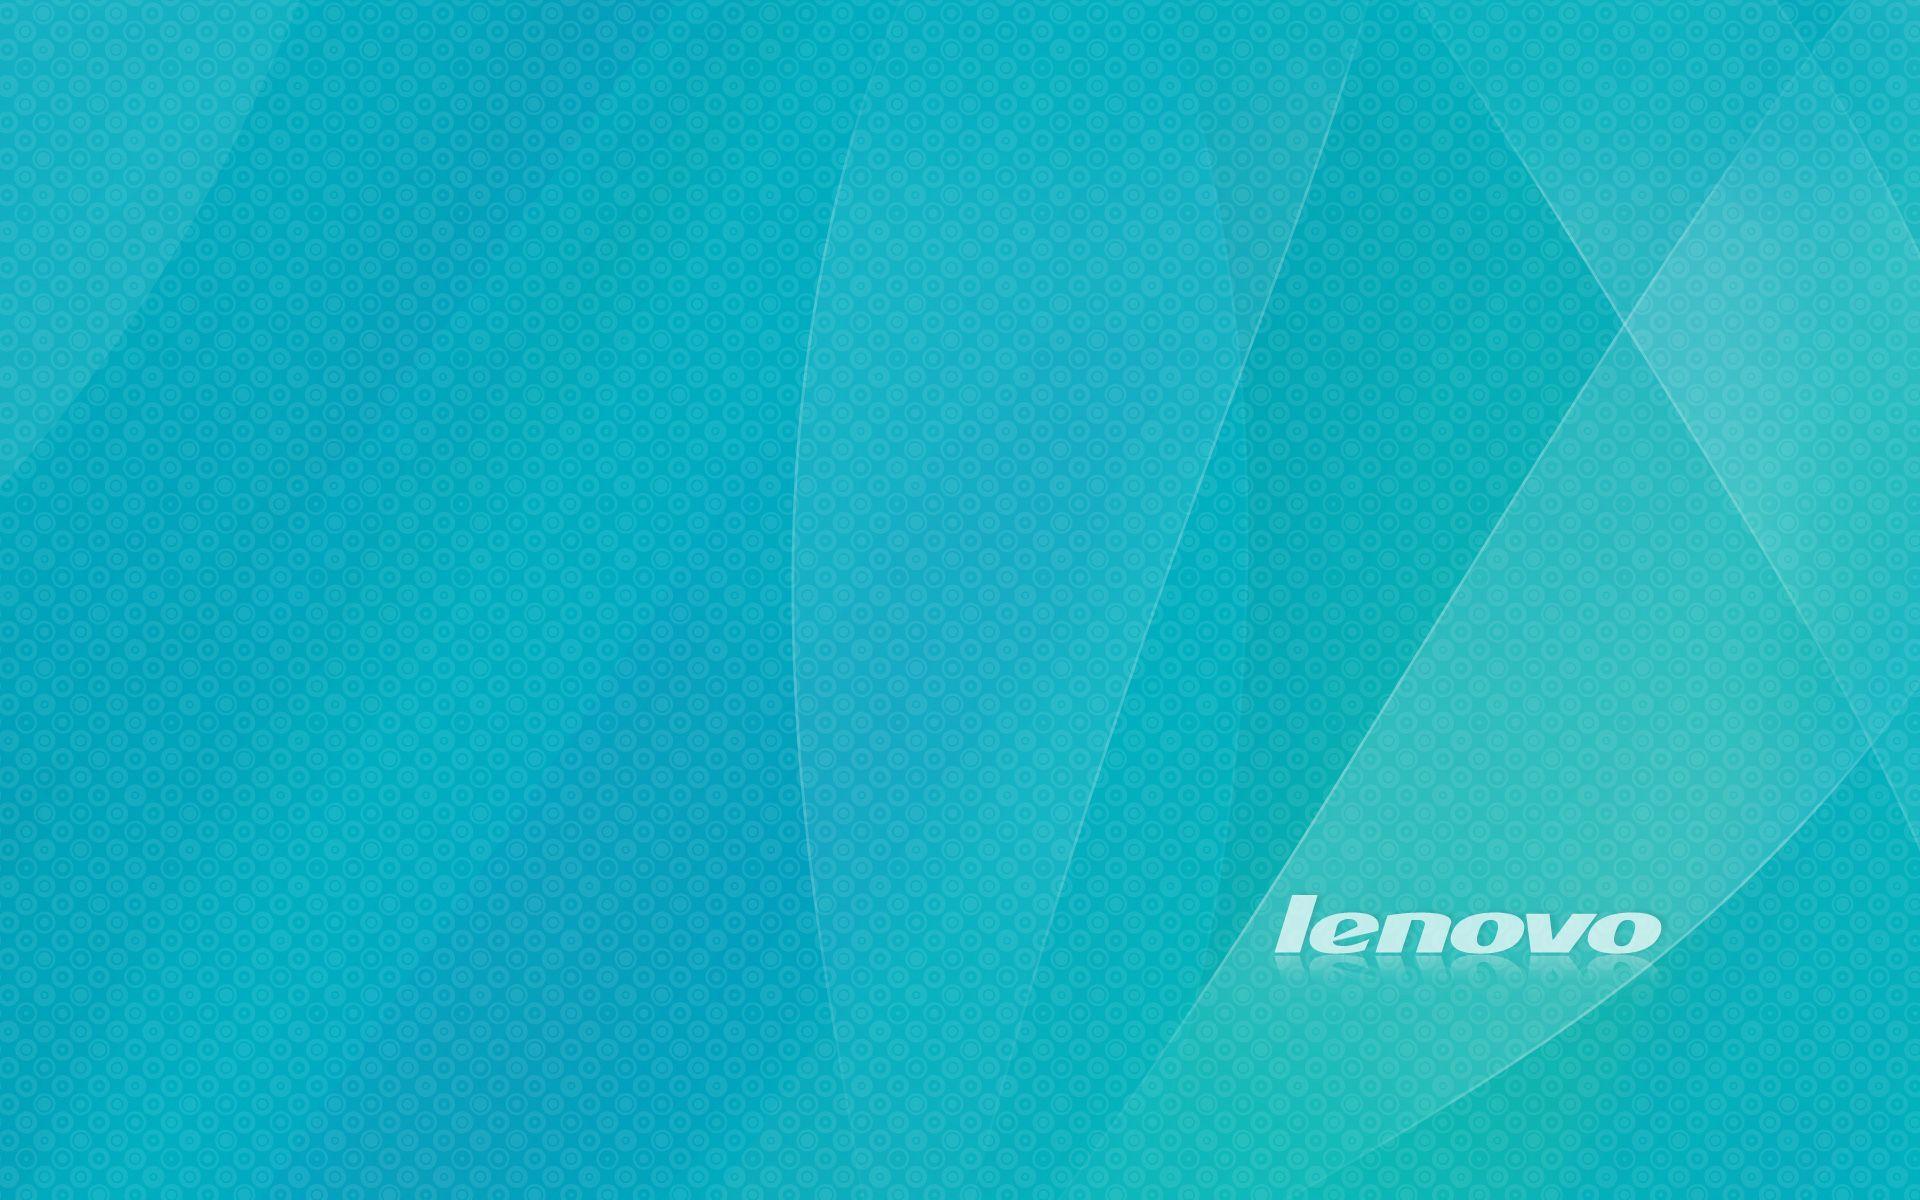 Lenovo Wallpaper. PC Doctor Ardee